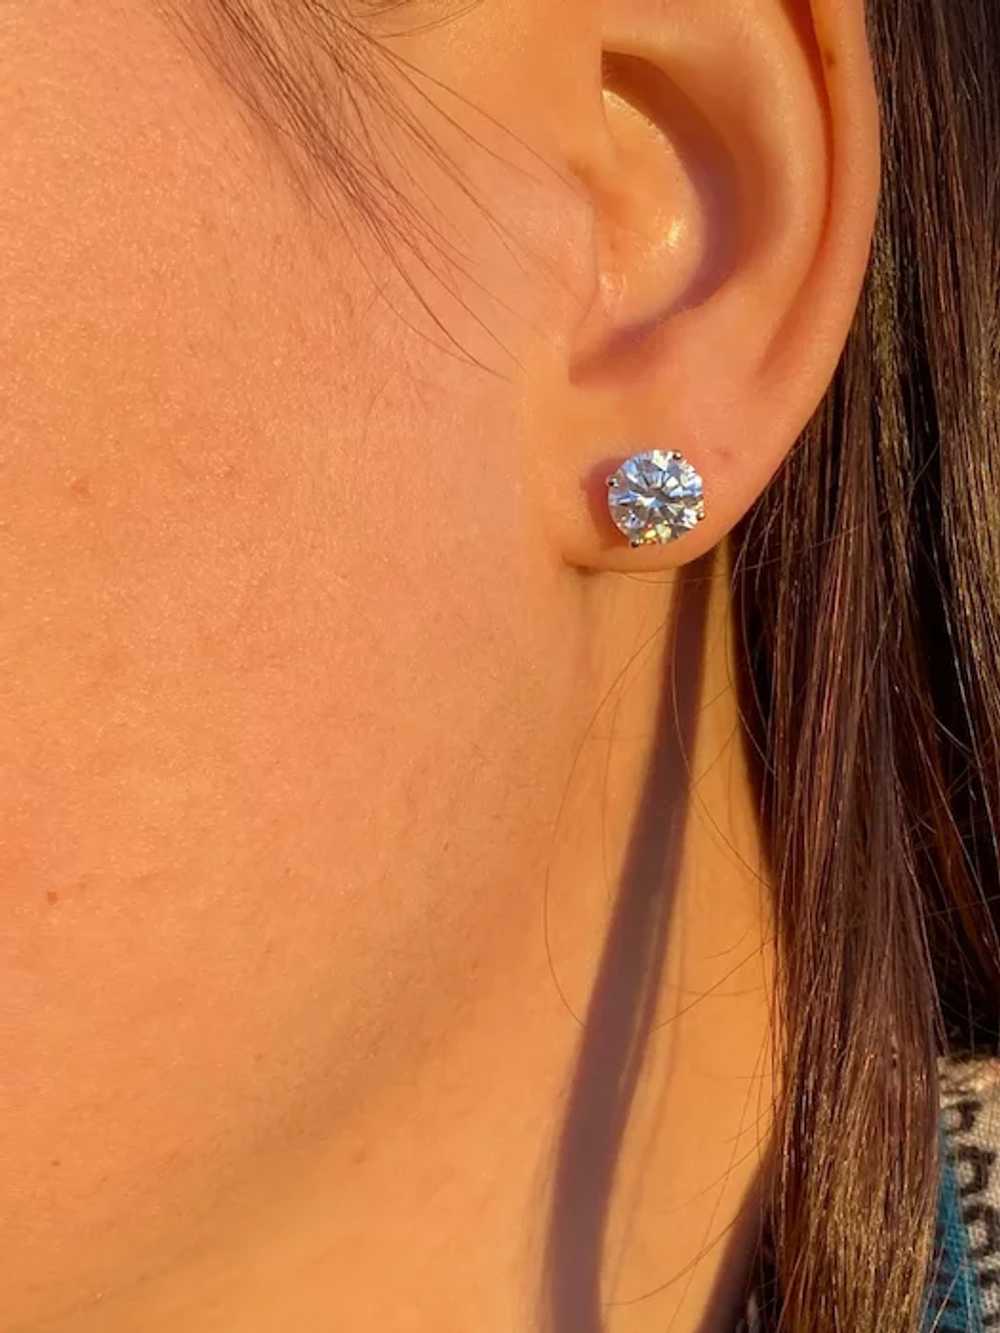 4.04 Carat Diamond Stud Earrings in White Gold - image 4